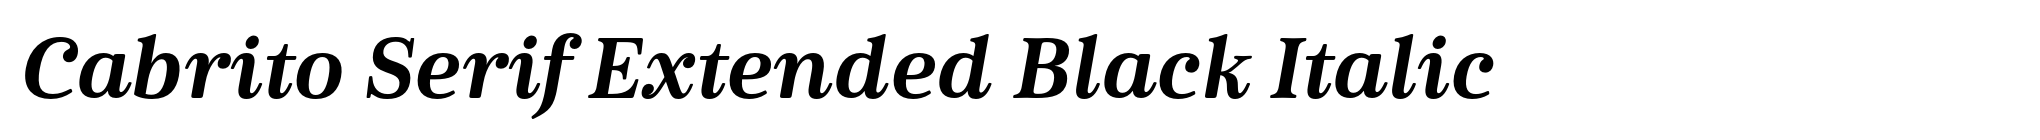 Cabrito Serif Extended Black Italic image